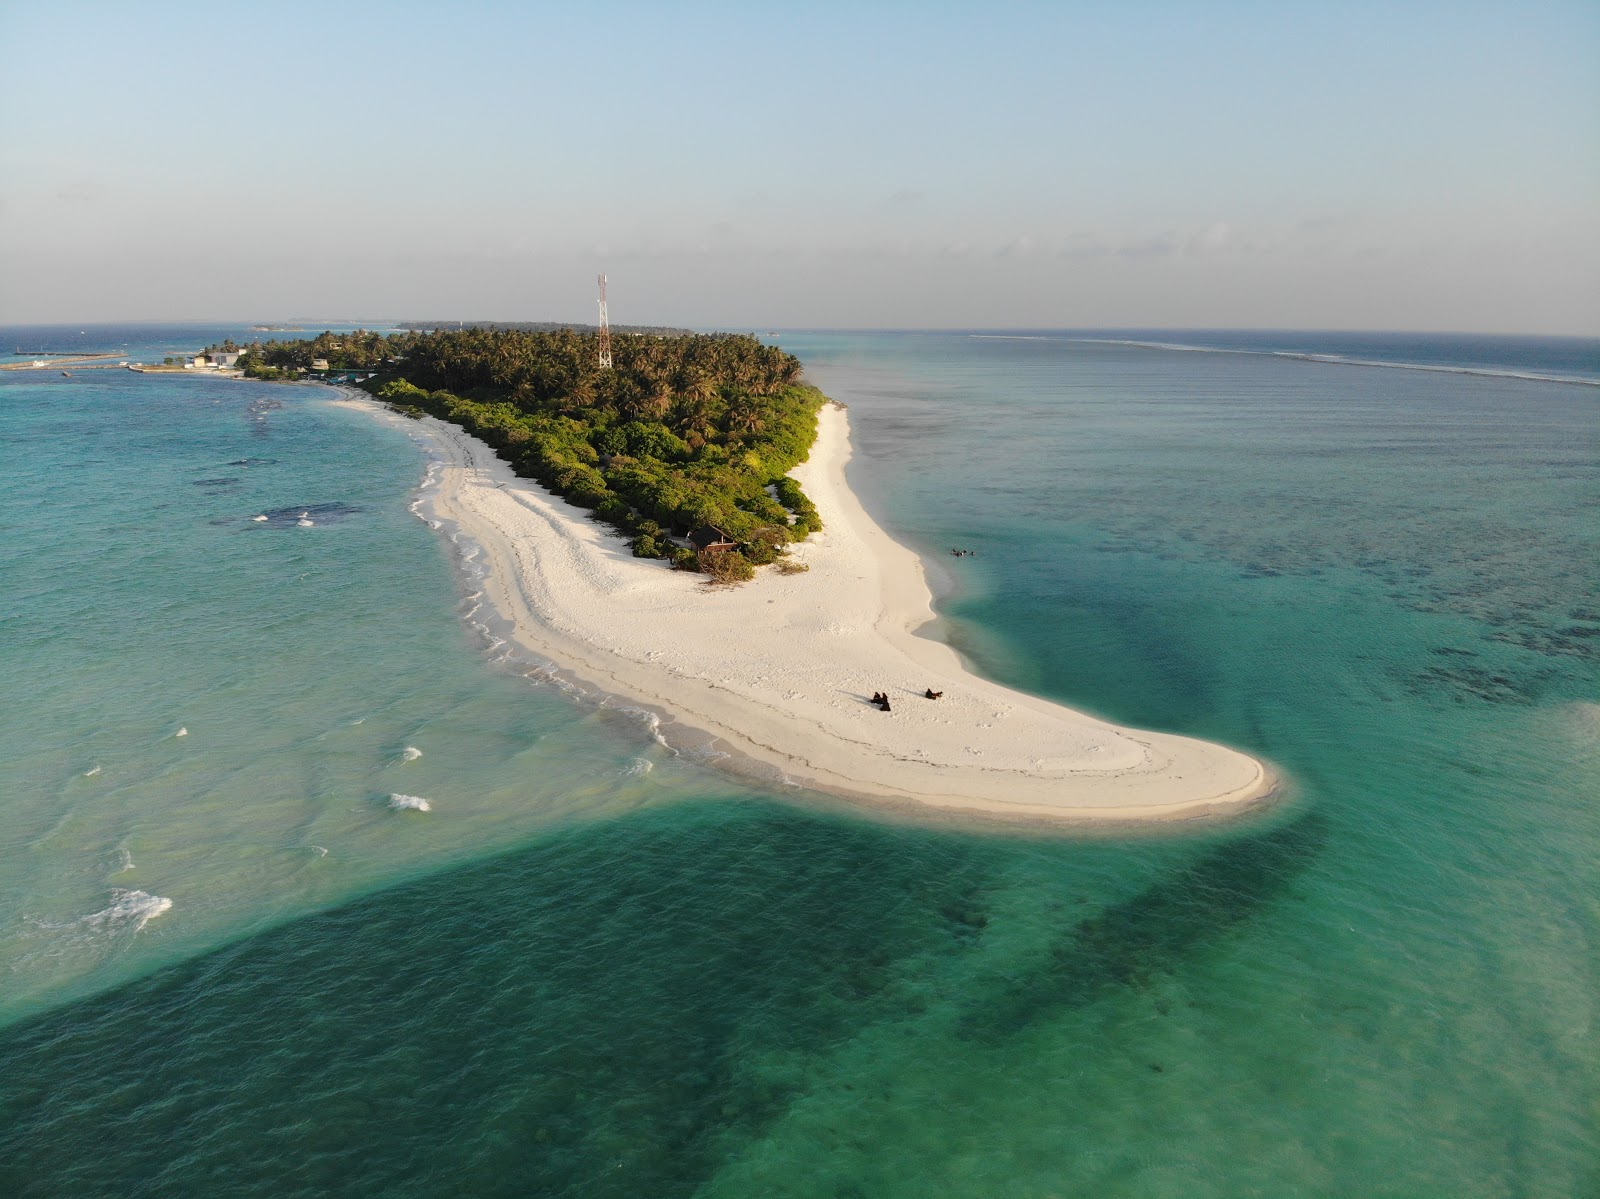 Fenfushee Island'in fotoğrafı geniş plaj ile birlikte